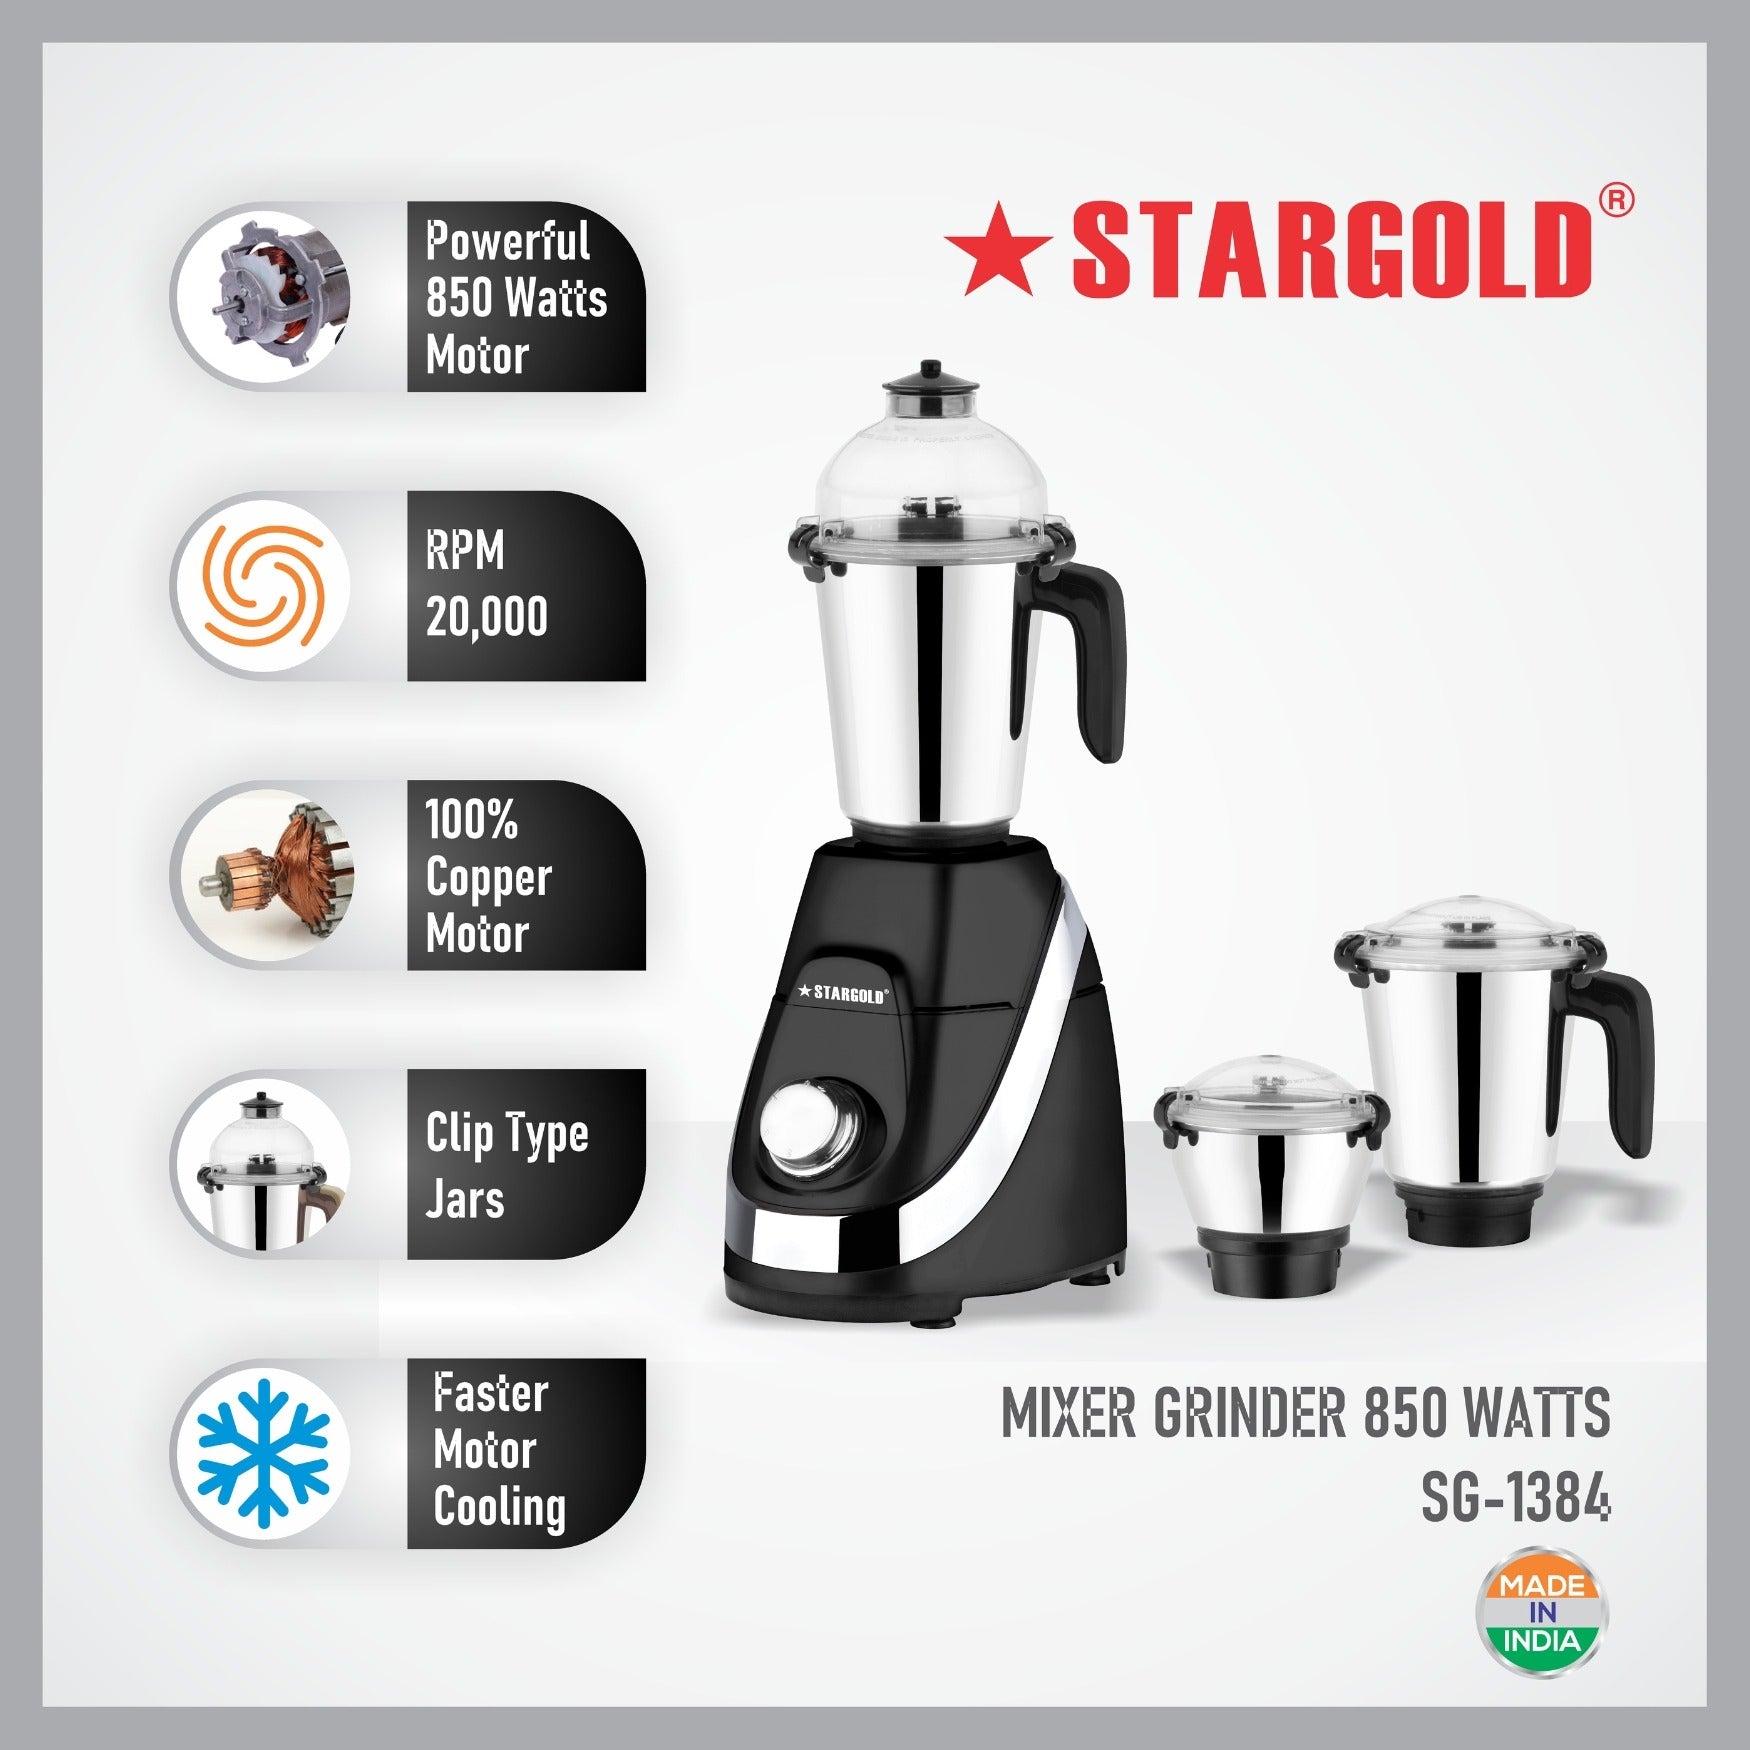 STARGOLD Mixer Grinder 3 In 1 Stainless Steel 3 Jar Body Blender 850W Powerful Motor Juicer Grinder - SG-1384